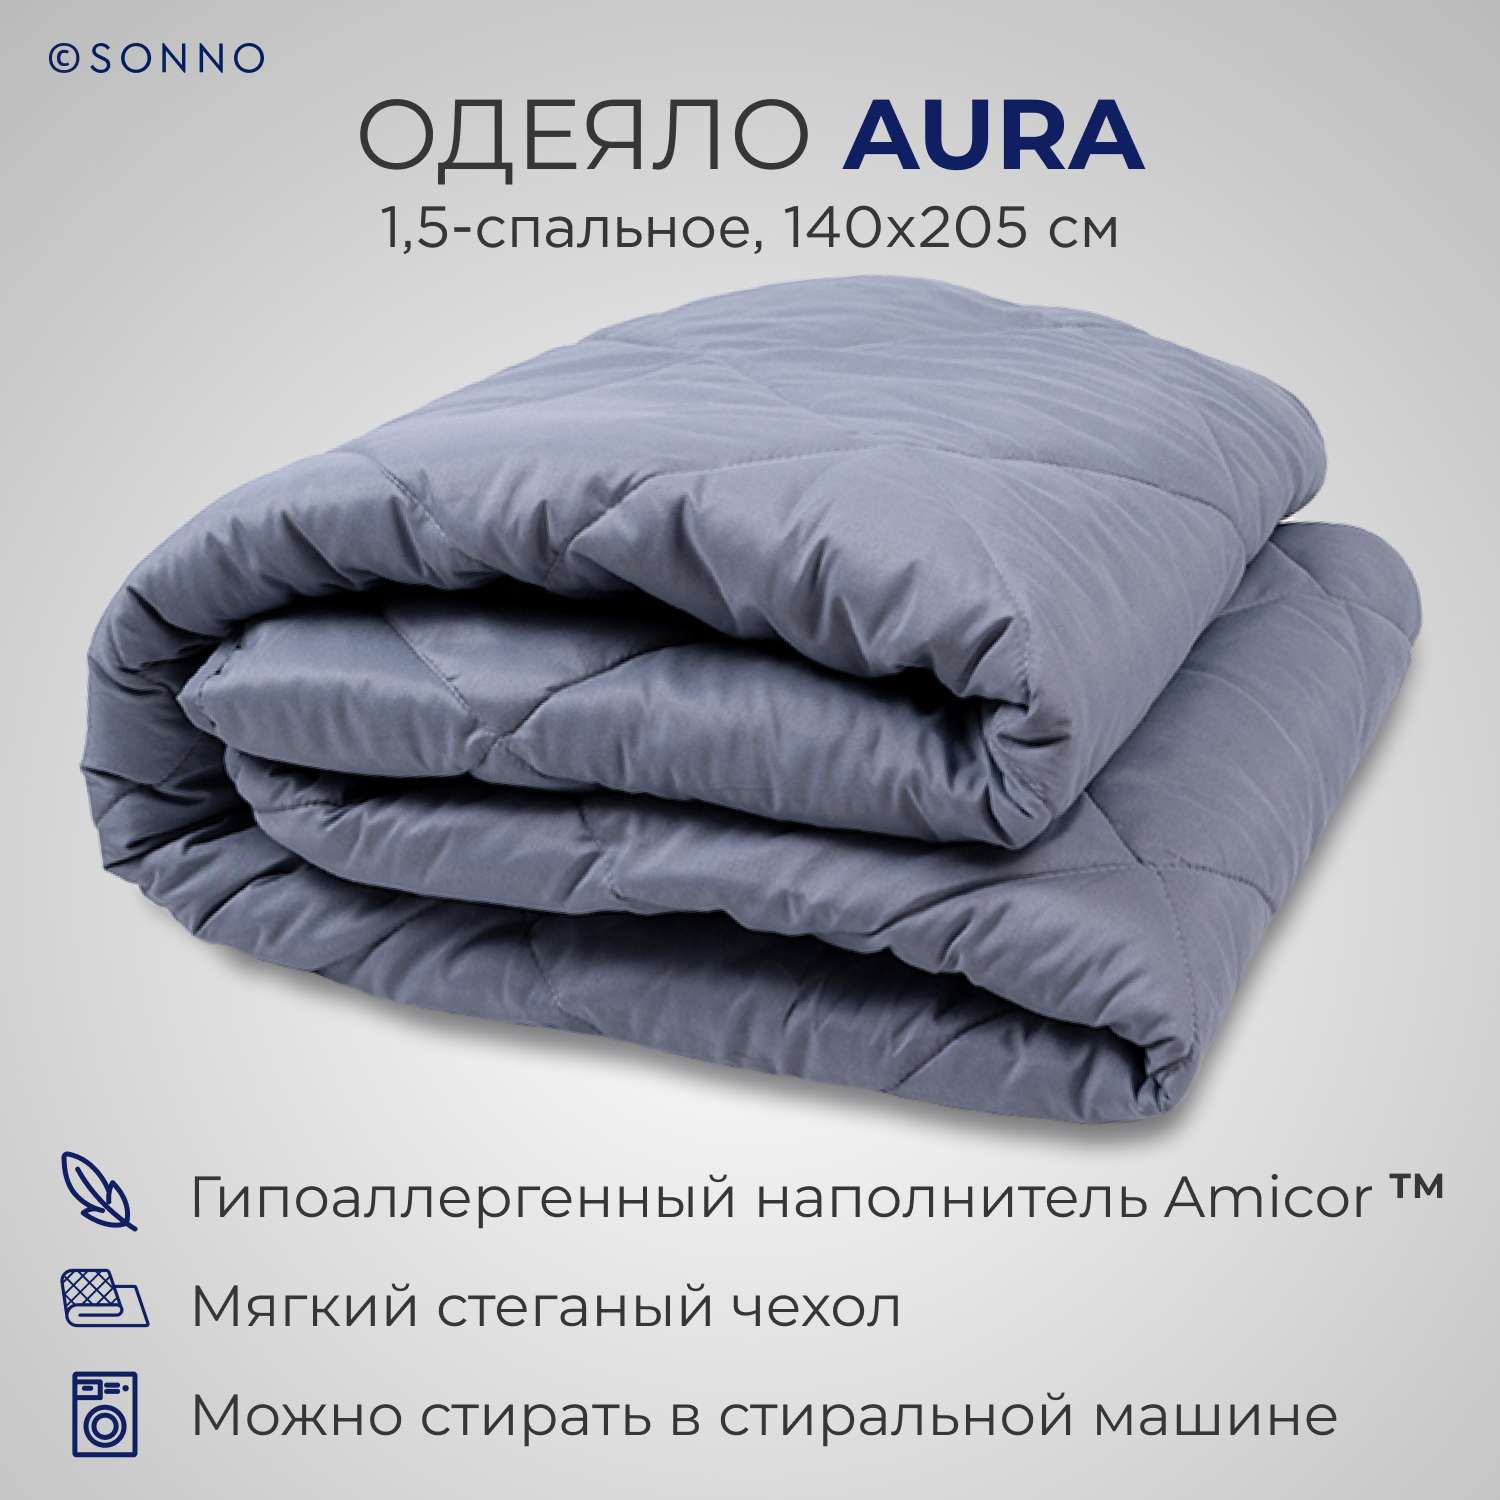 Одеяло SONNO AURA 1.5 сп. 140х205 Amicor TM Цвет Французский серый - фото 1